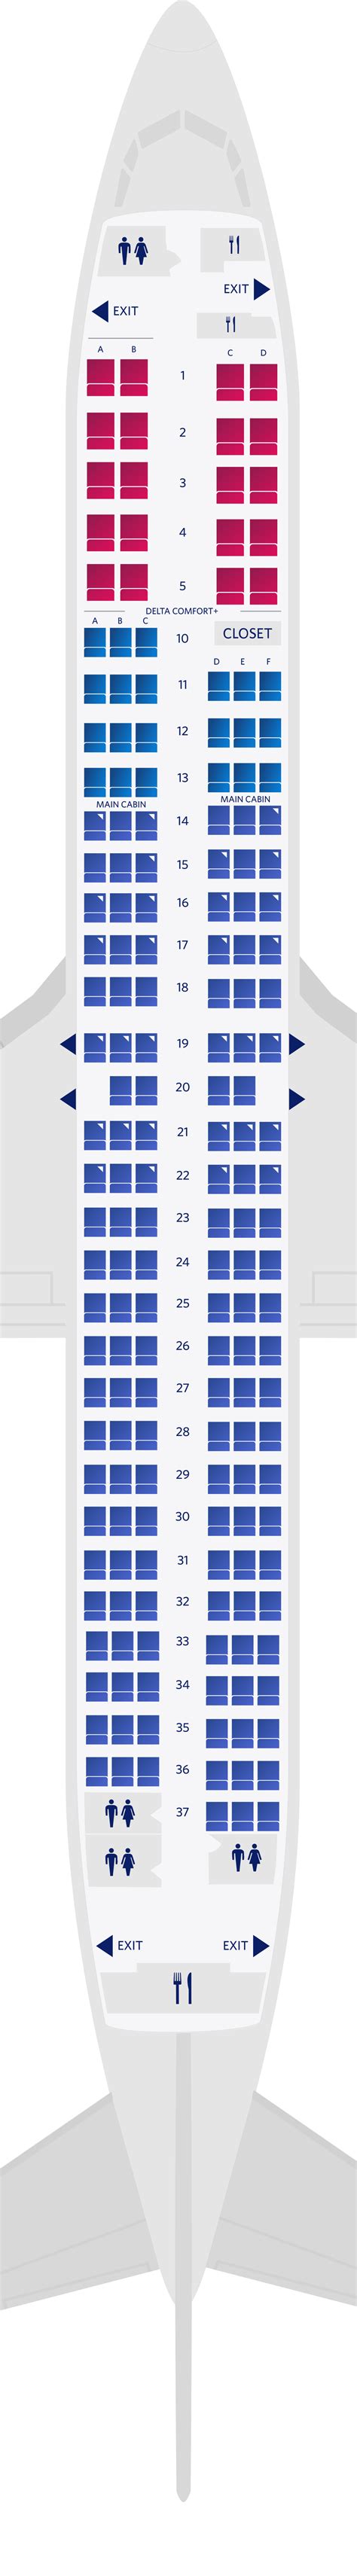 Boeing Seating Chart Delta Frameimage Org